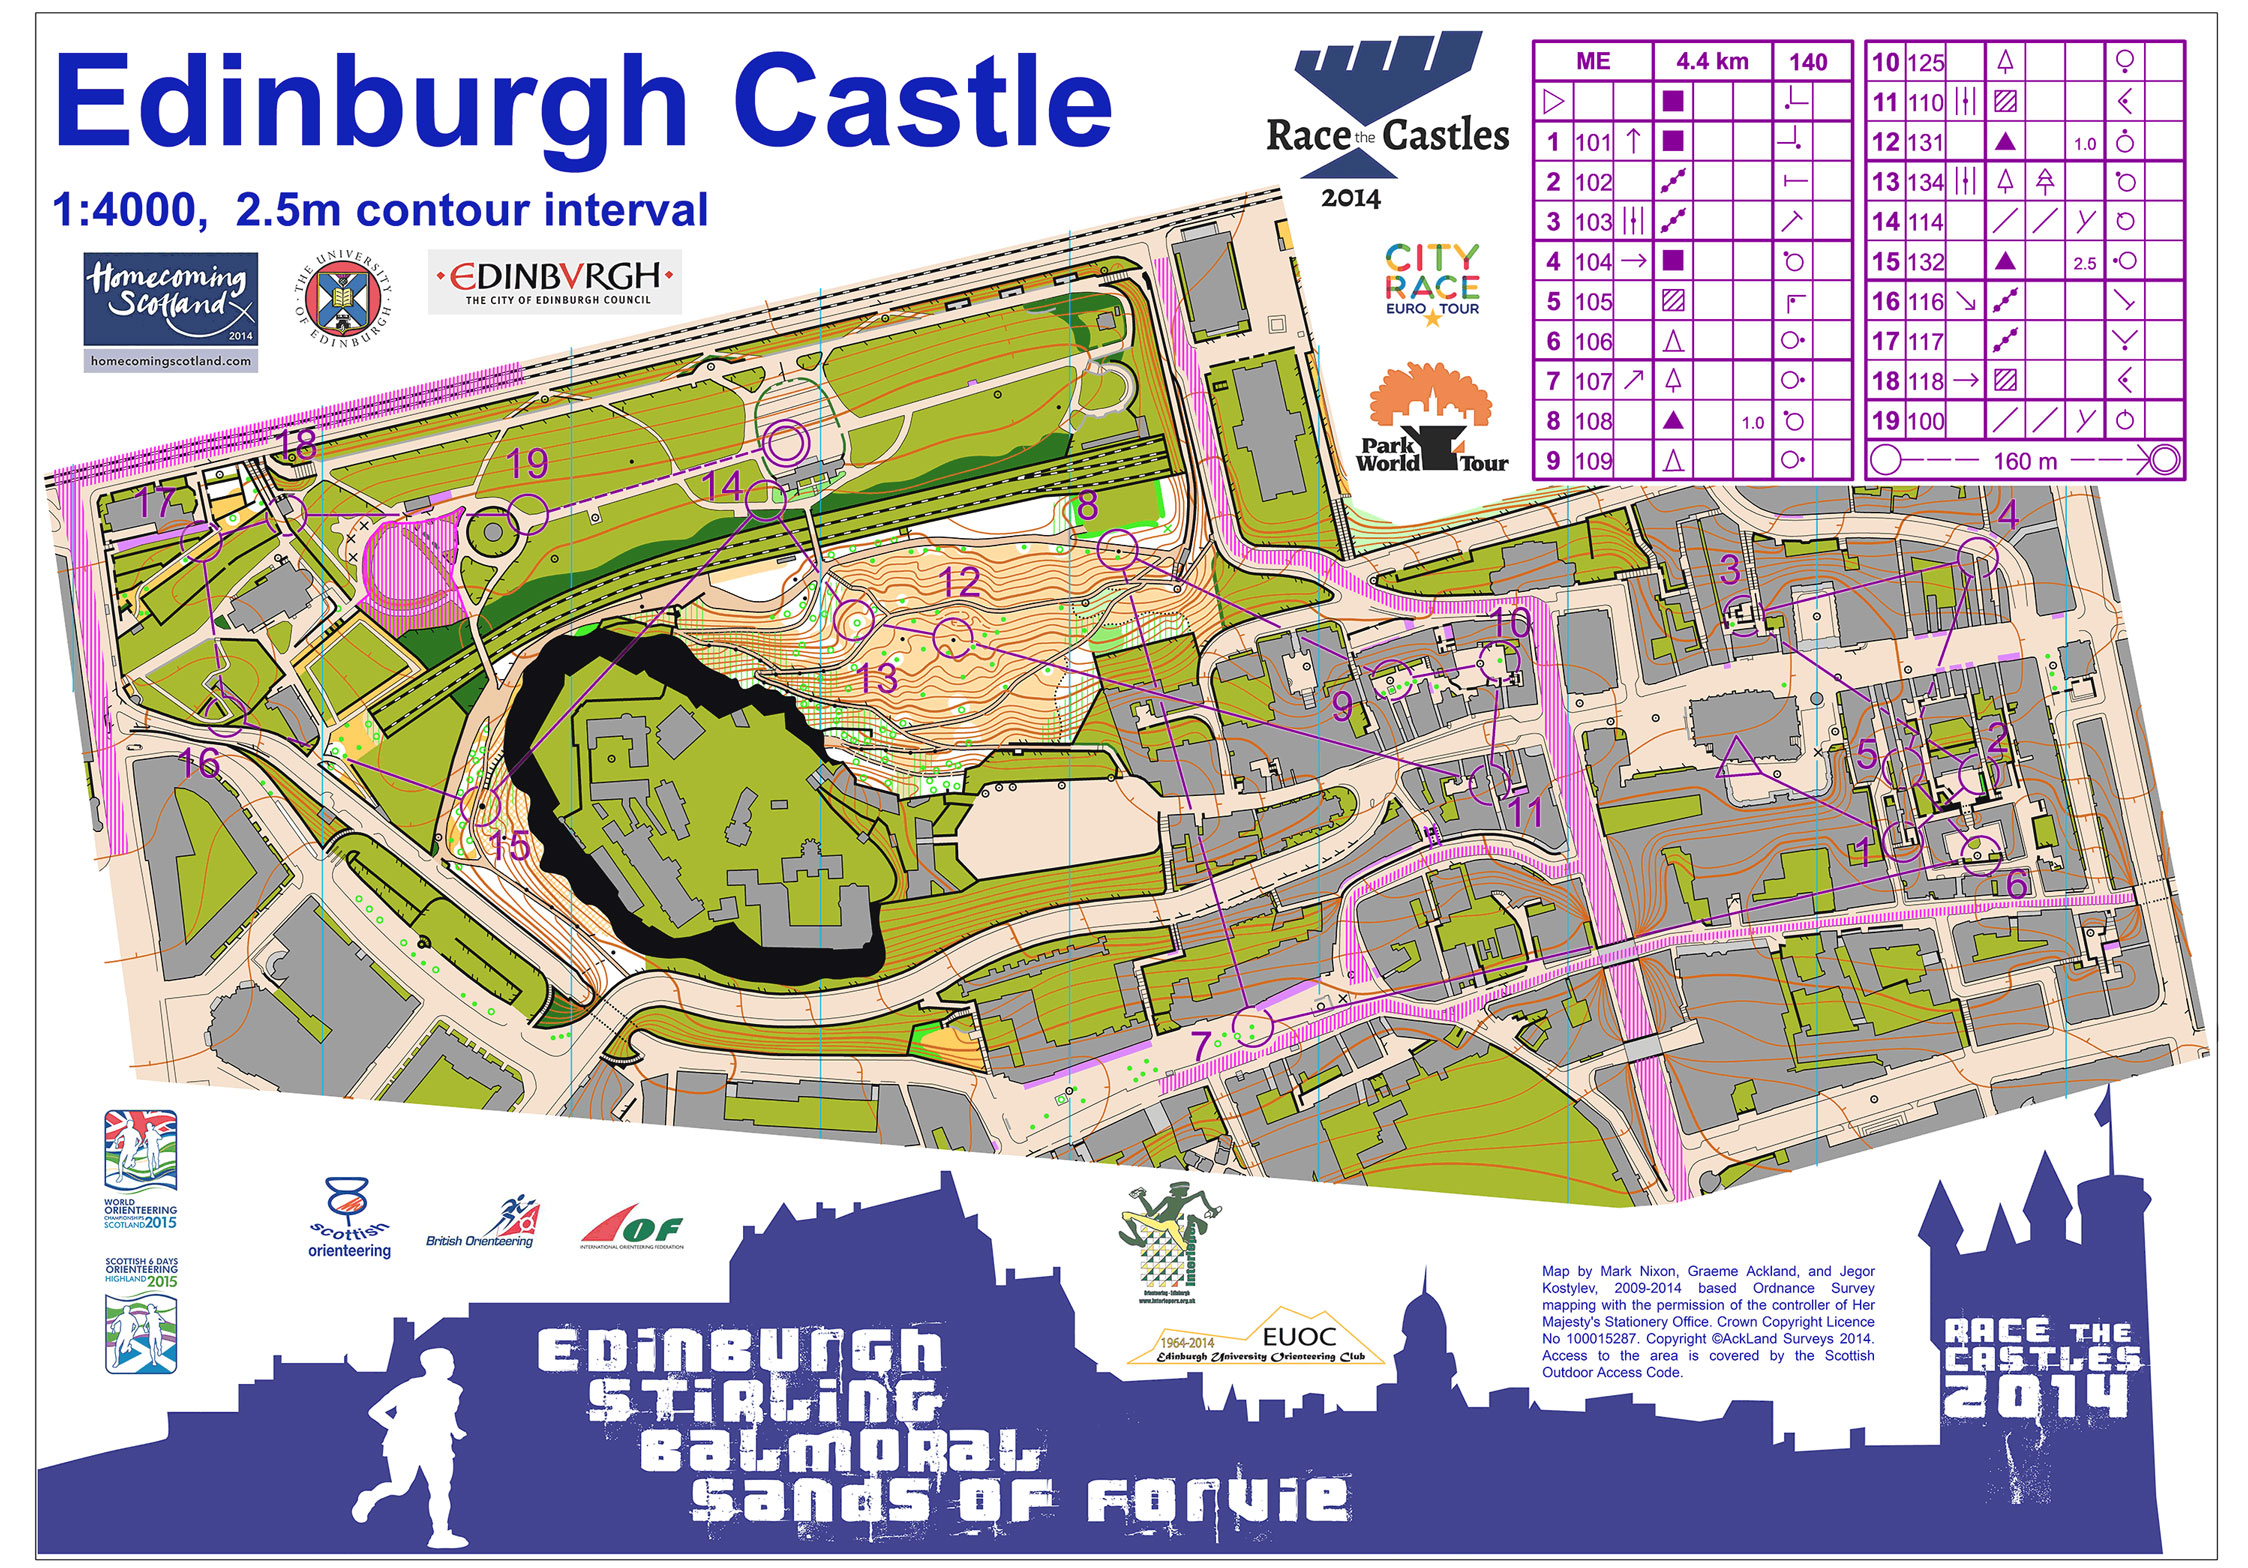 Race the Castles Edinburgh (11-10-2014)